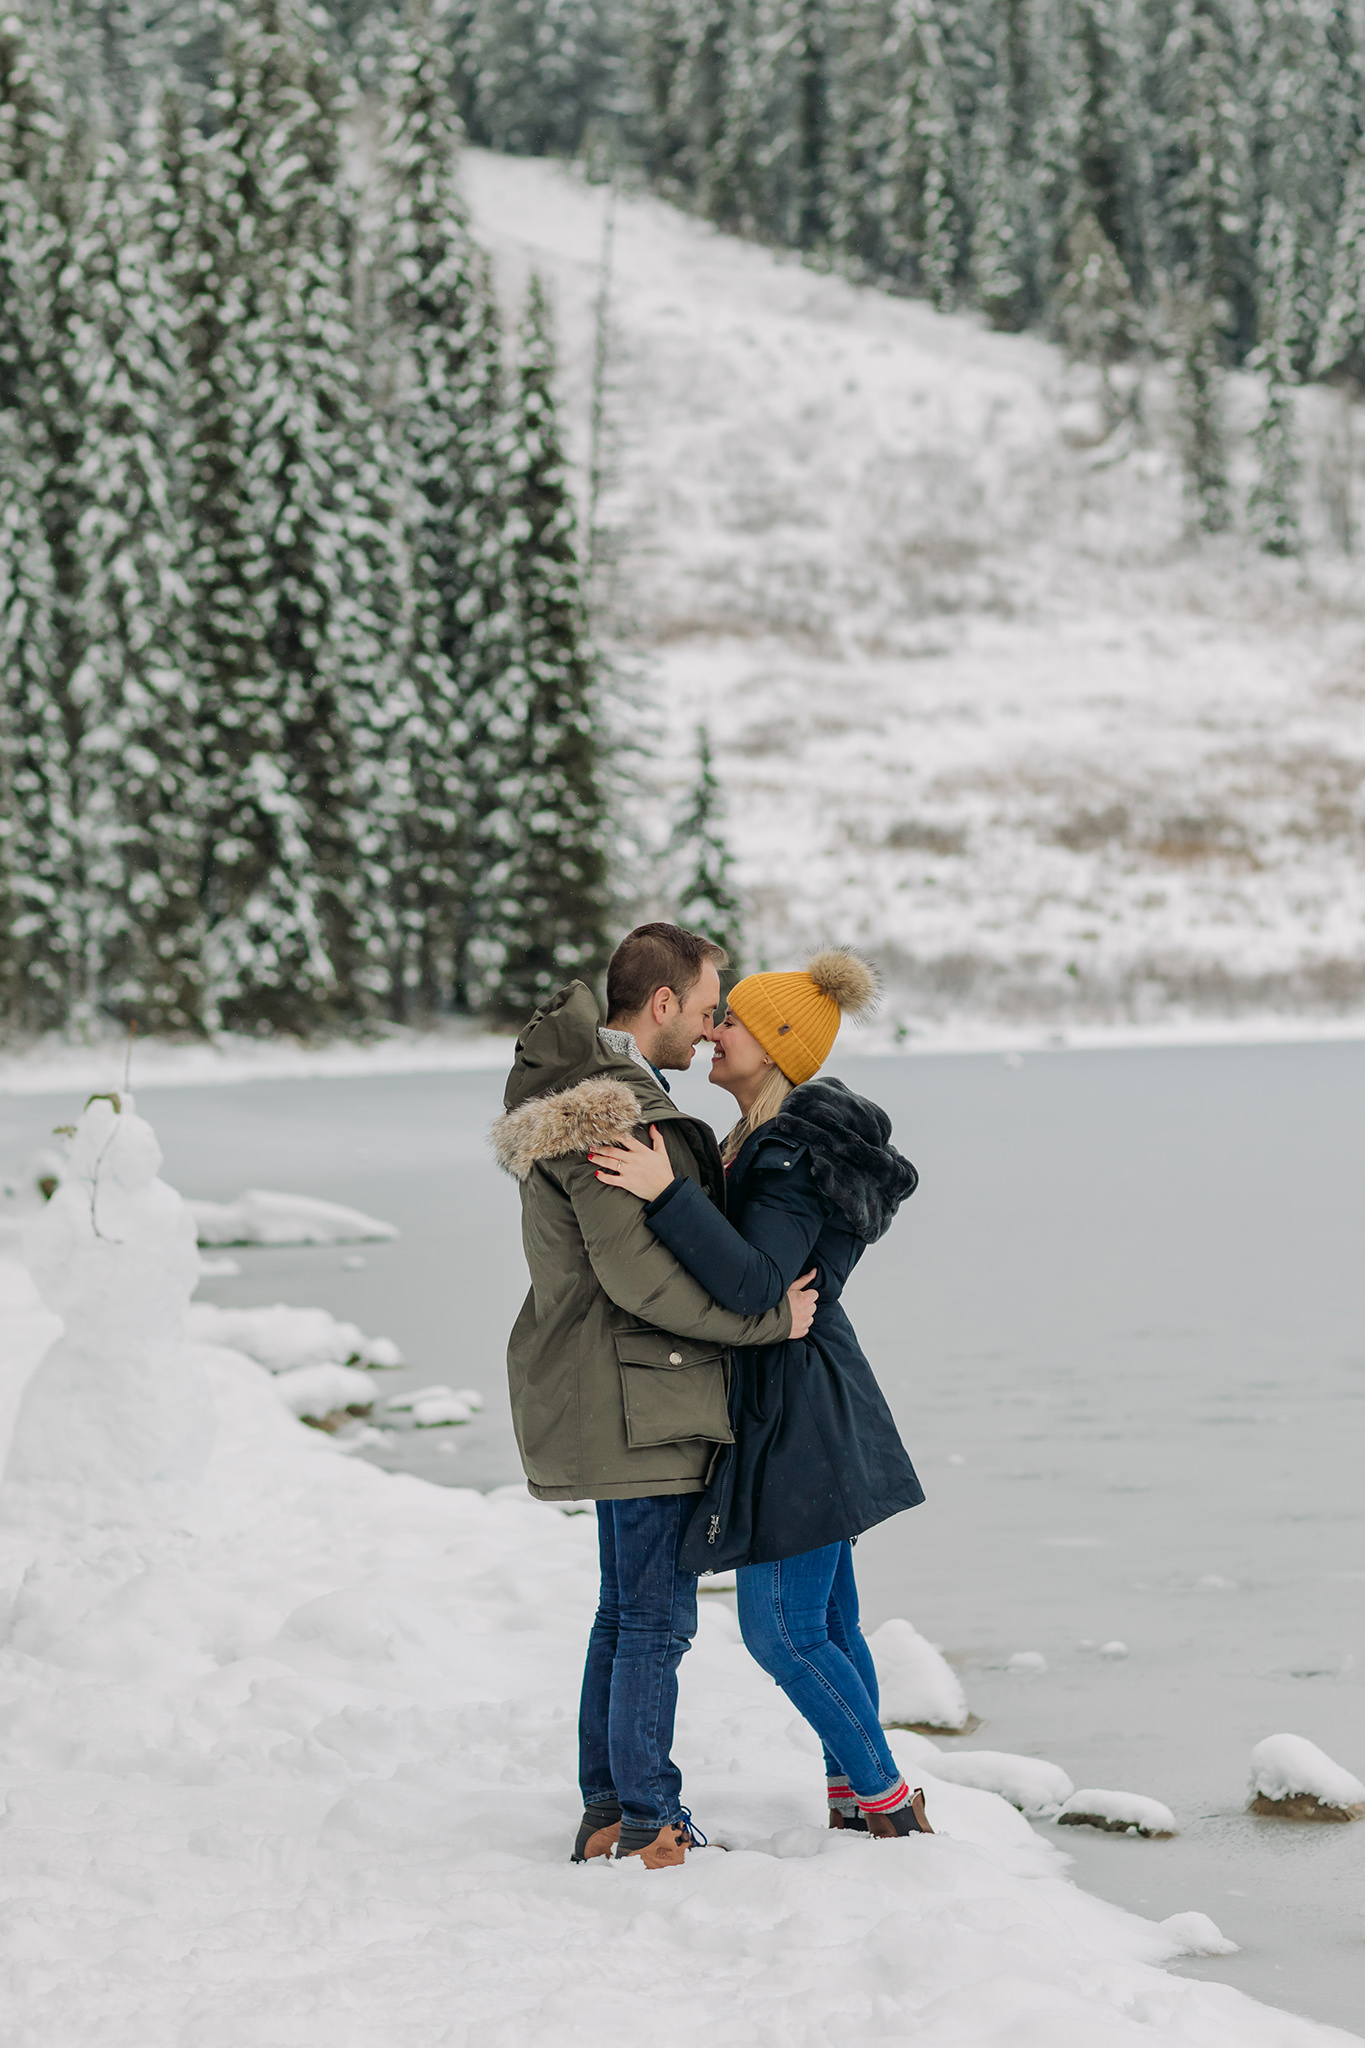 emerald lake winter engagement photos with freshly frozen lake & colourful style